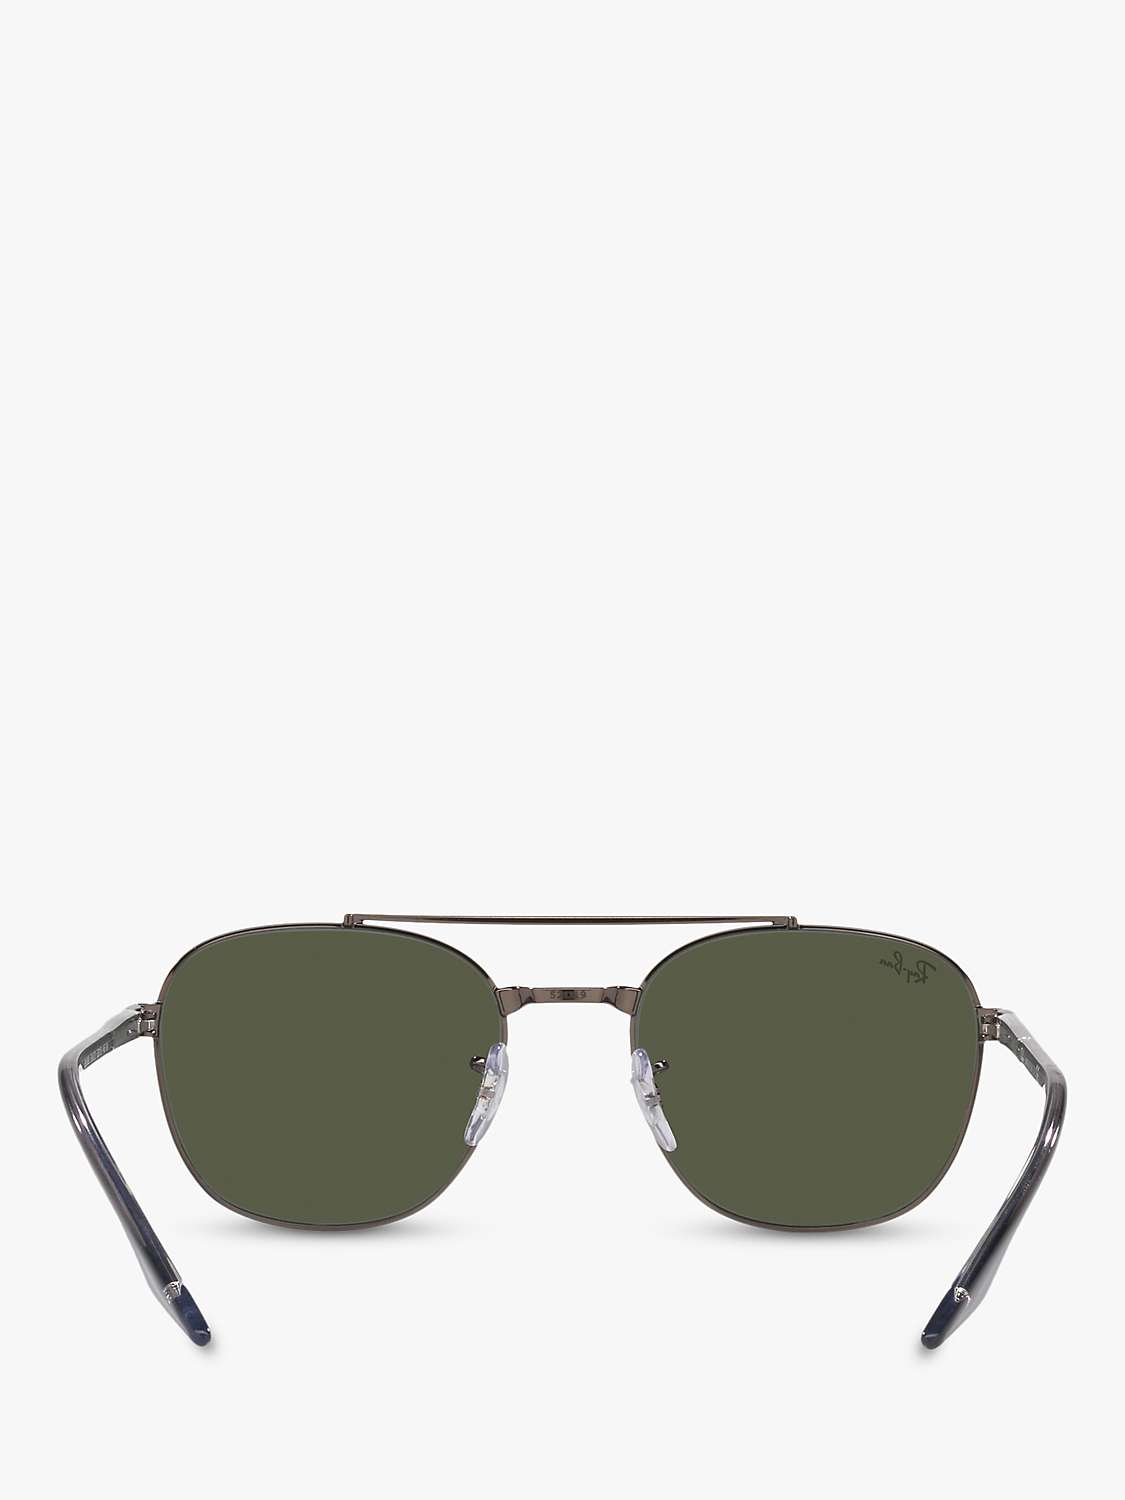 Buy Ray-Ban RB3688 Unisex Square Sunglasses, Gunmetal/Green Online at johnlewis.com